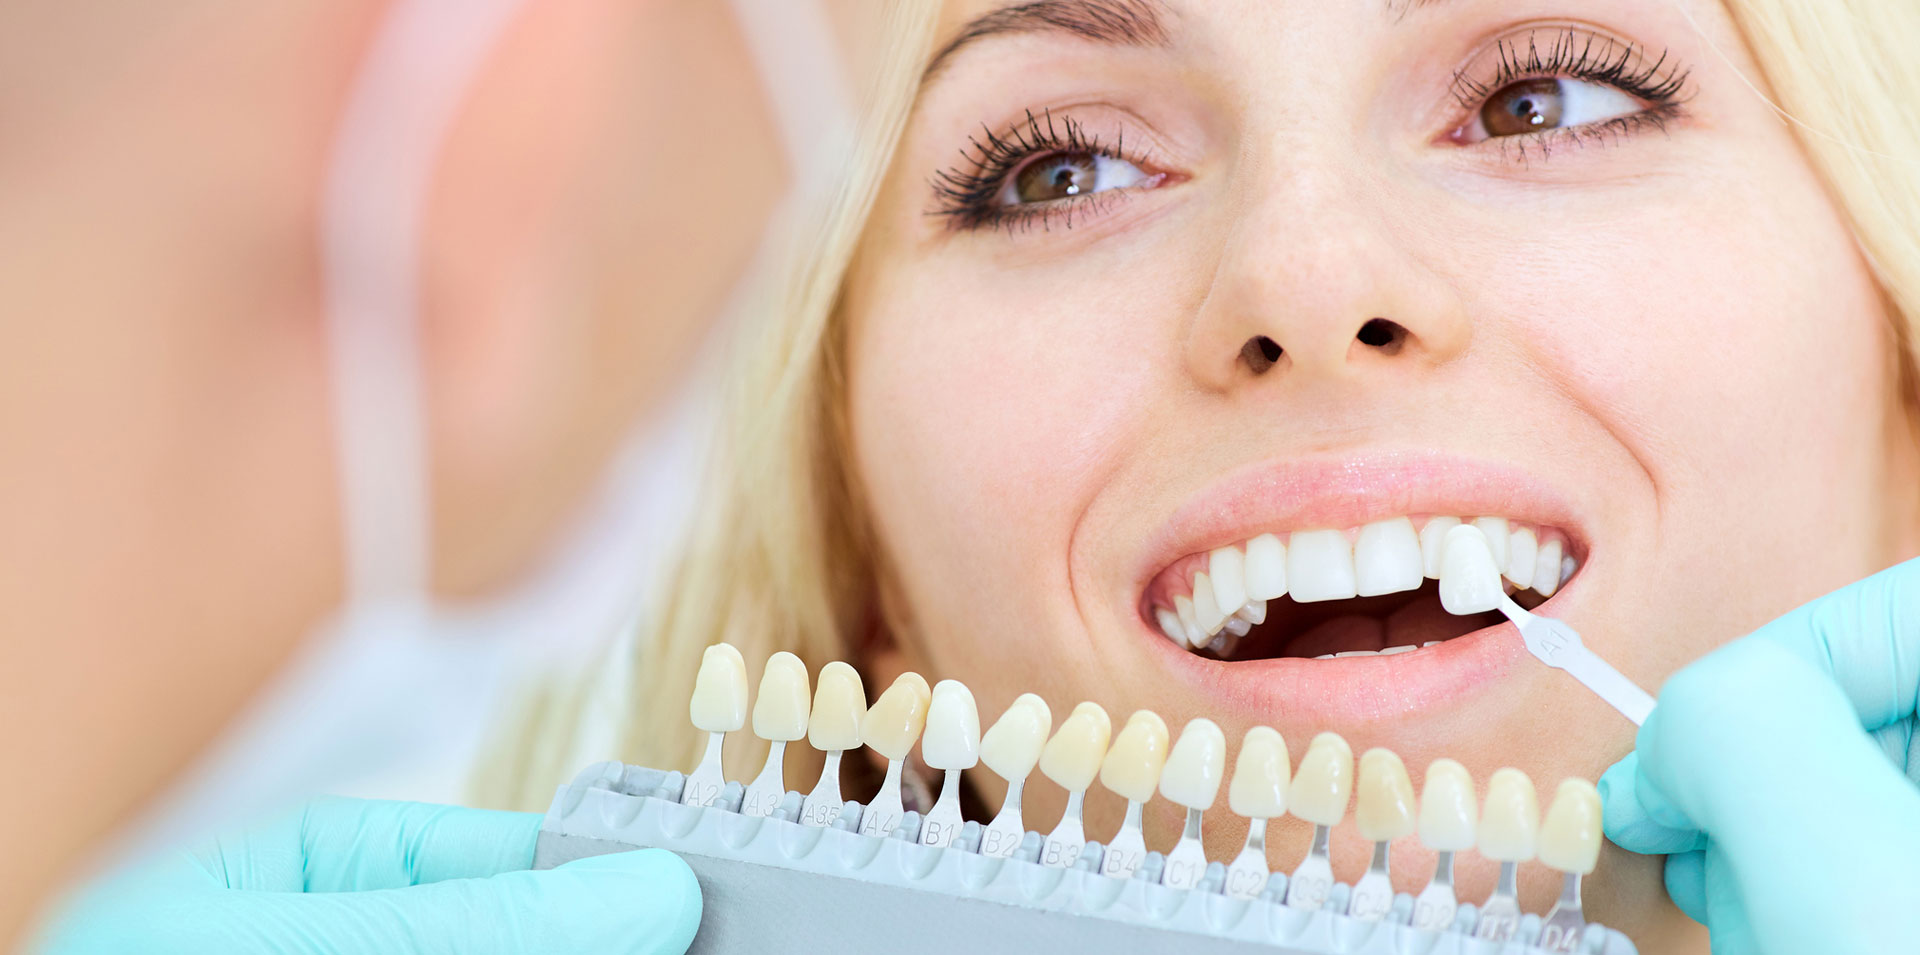 Dentist and patient checking dental veneers